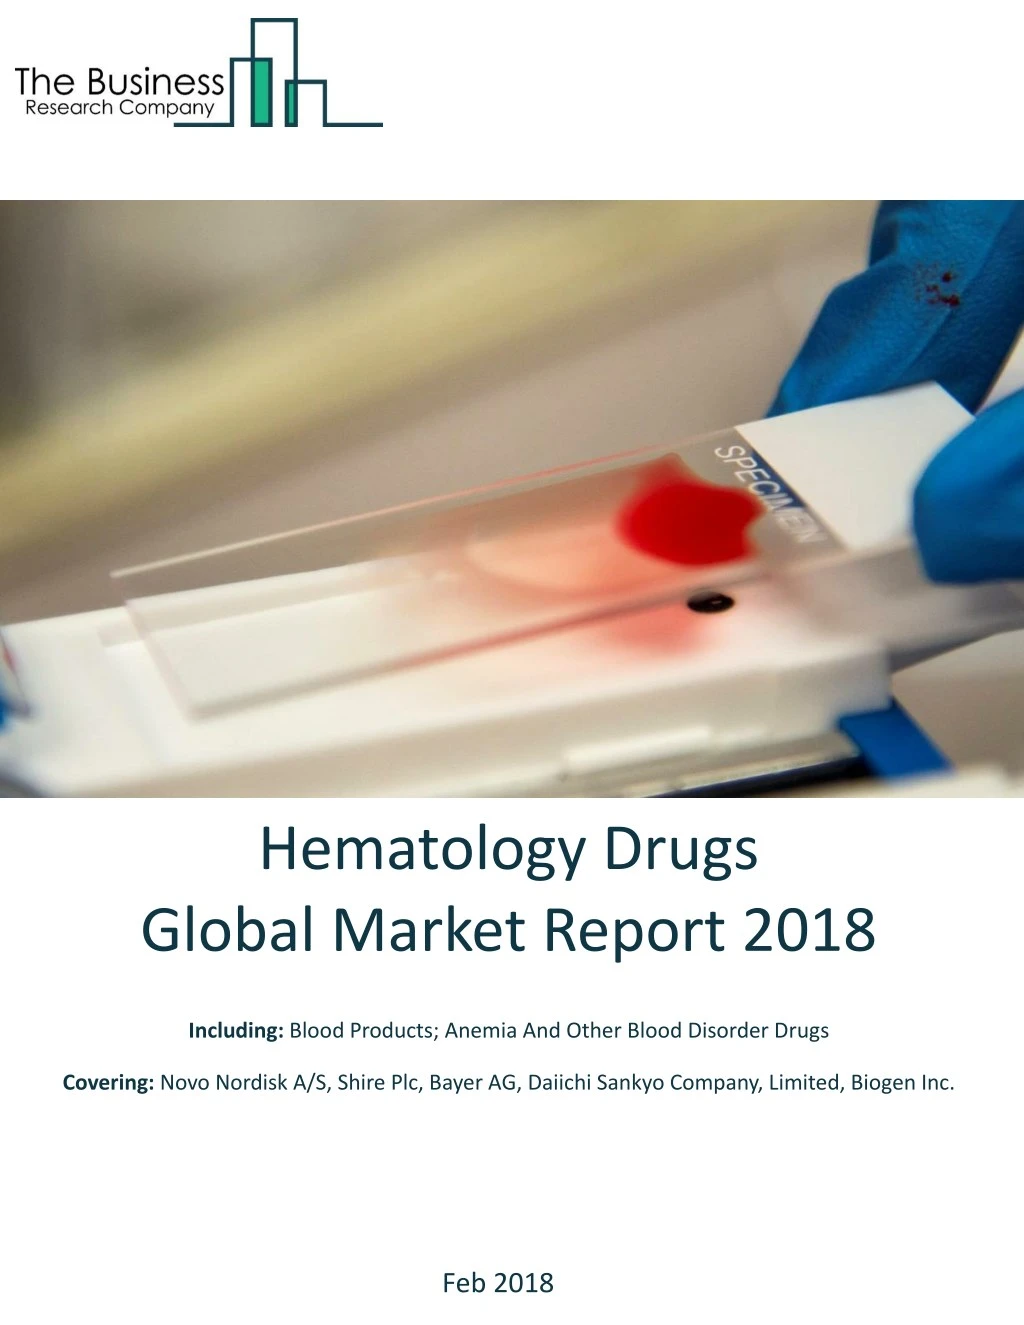 hematology drugs global market report 2018